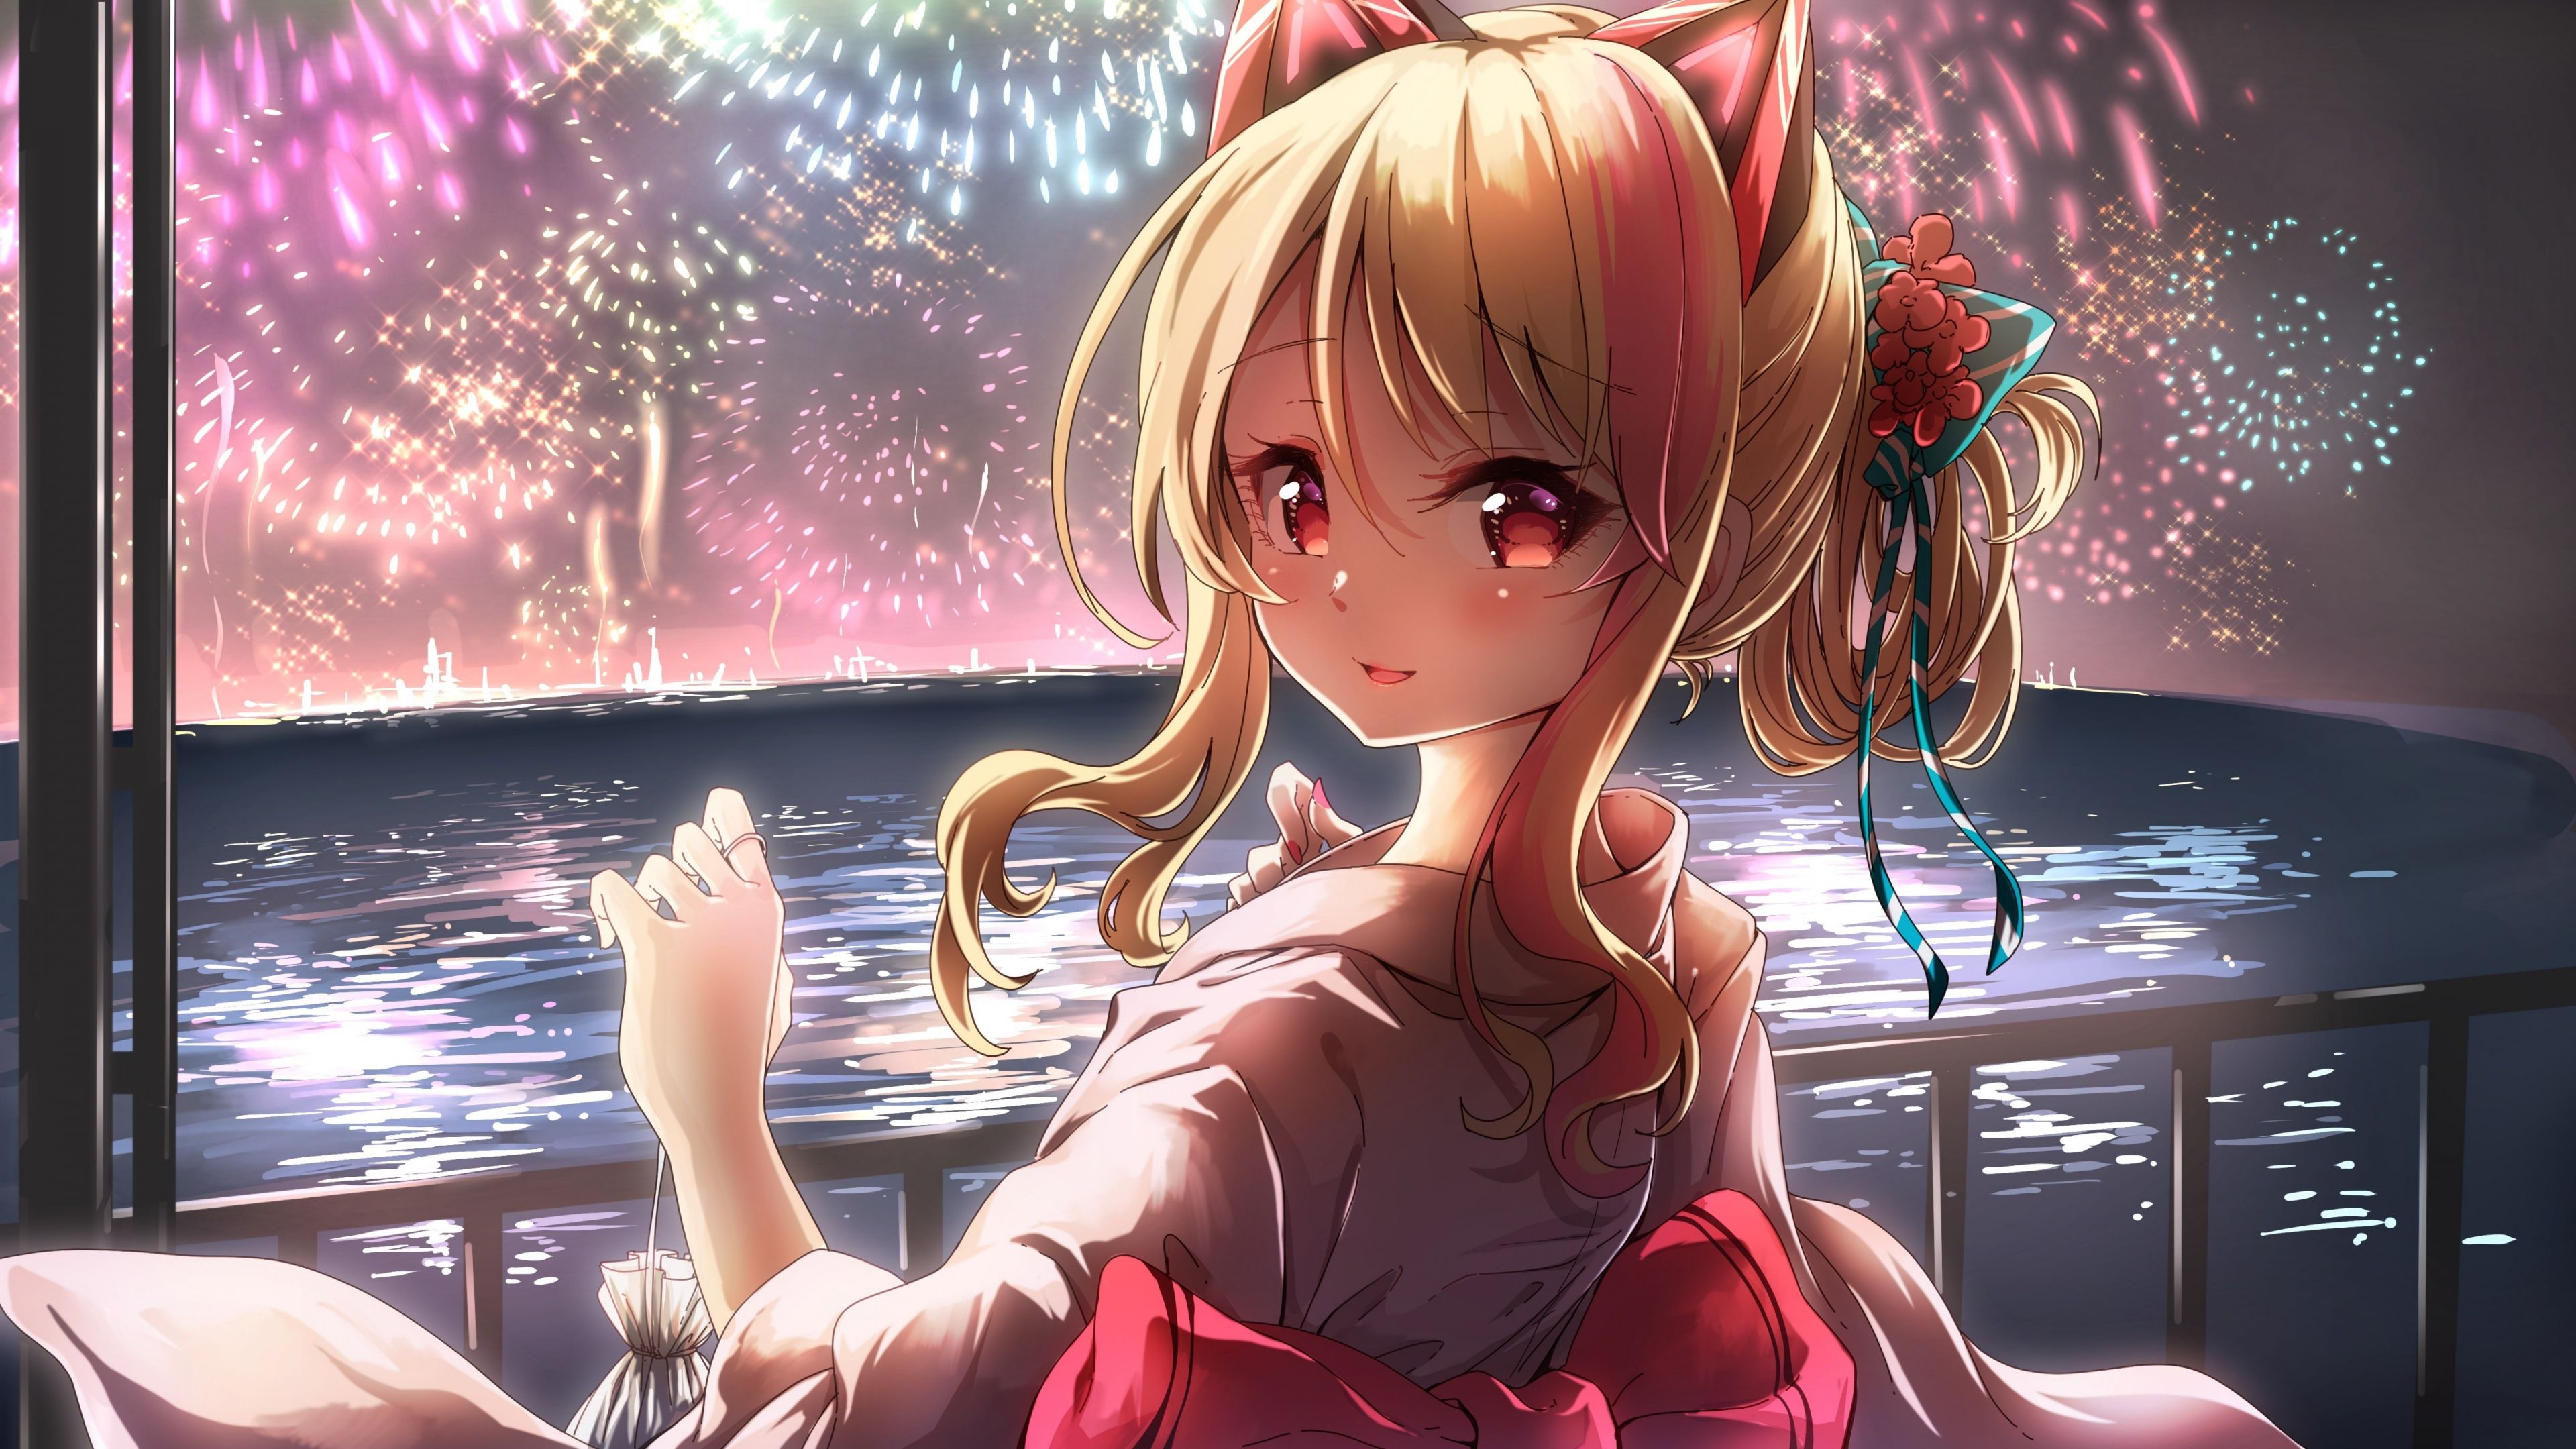 Anime girl with fireworks Wallpaper 5k Ultra HD